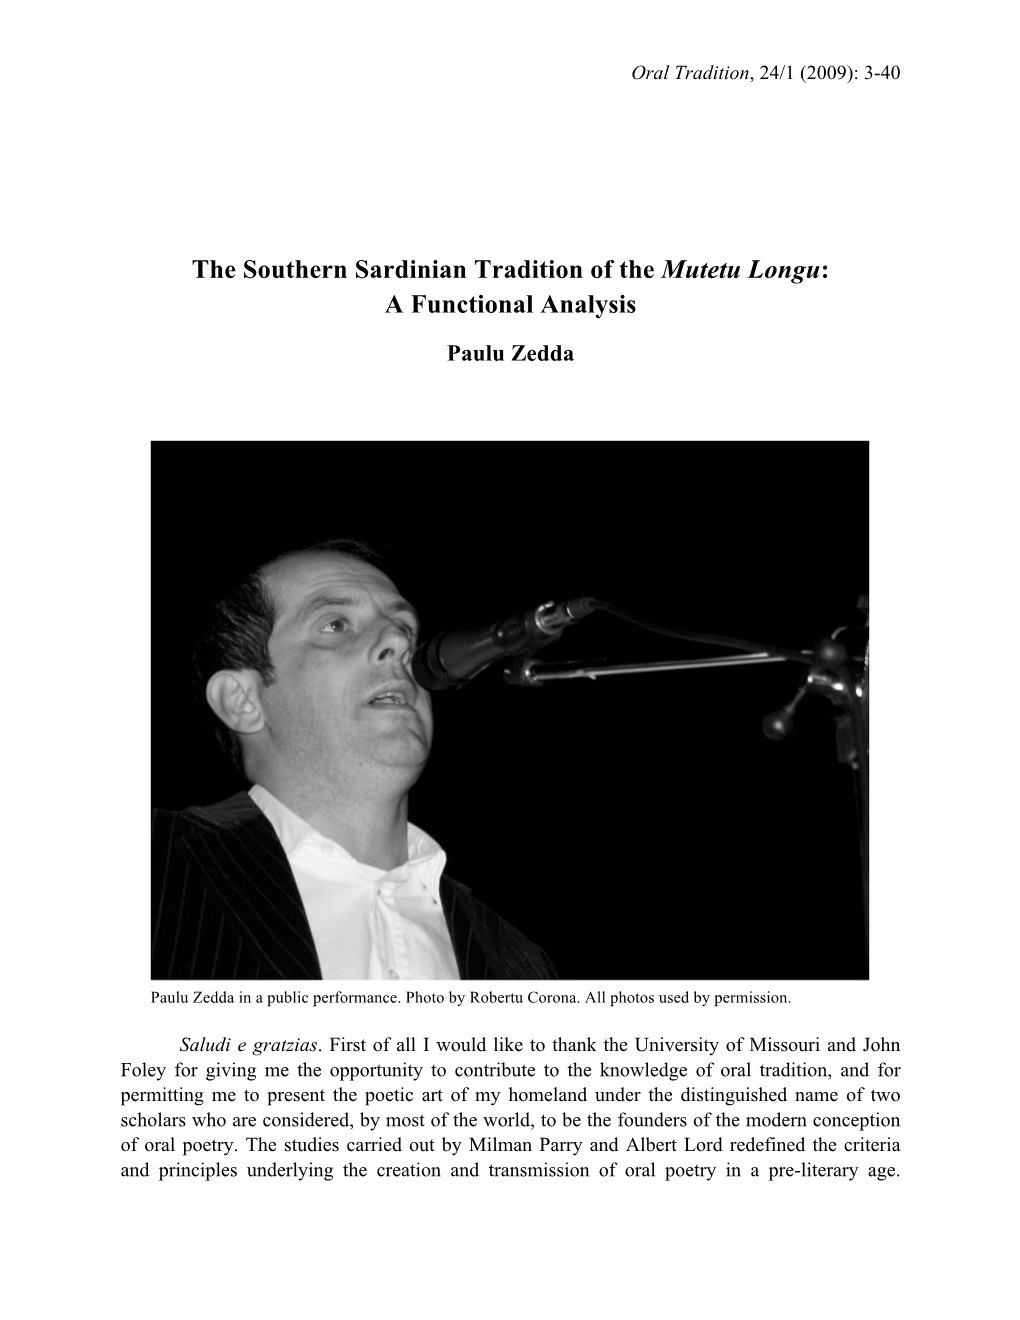 The Southern Sardinian Tradition of the Mutetu Longu: a Functional Analysis